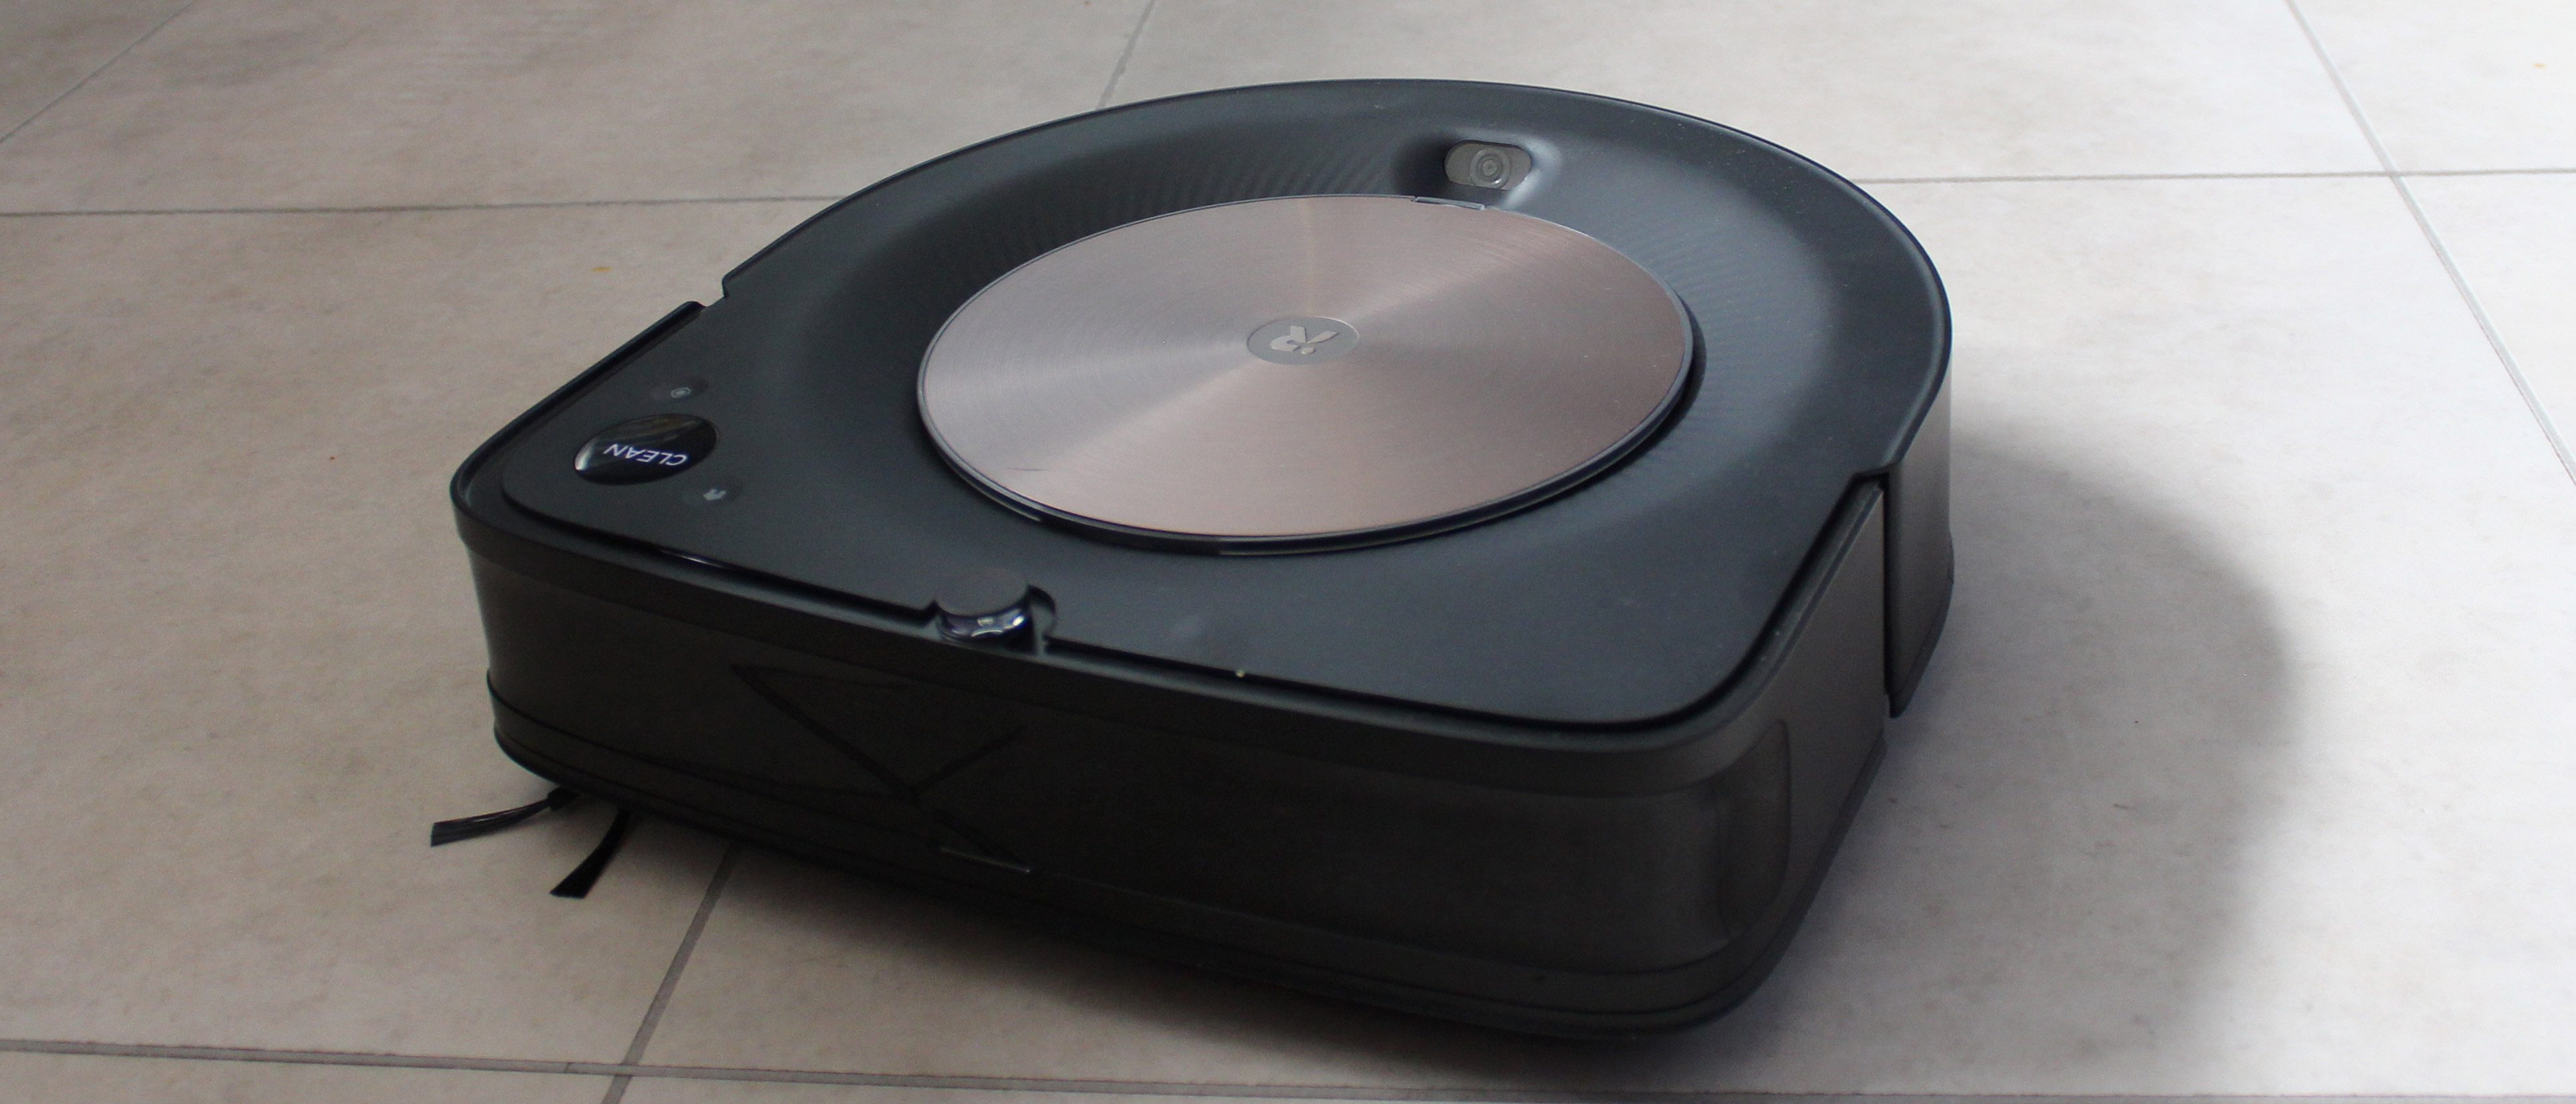 Specialist Premonition horisont iRobot Roomba S9 Plus review | TechRadar